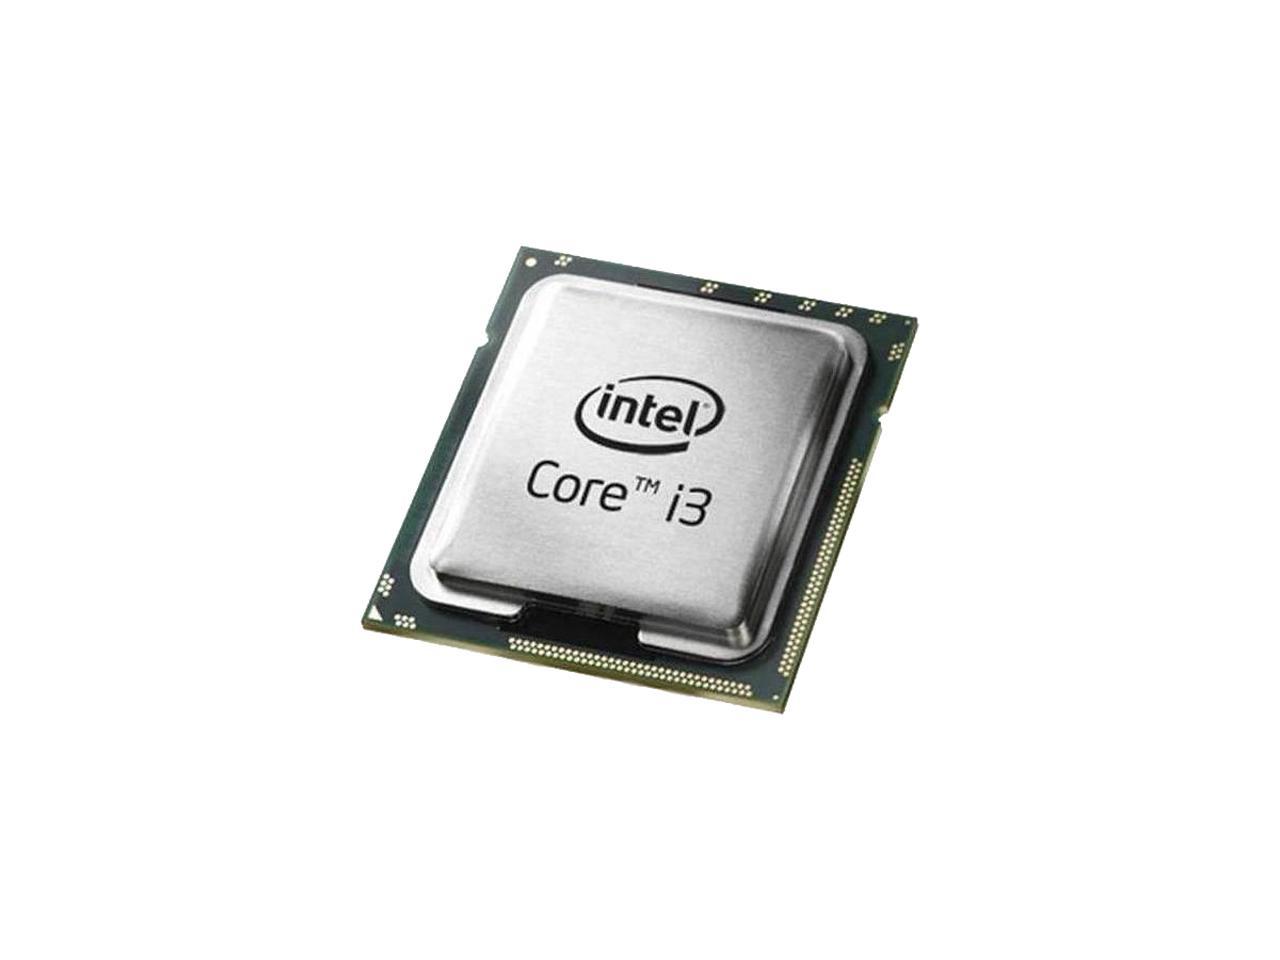 Intel OEM Core i3-8100 Coffee Lake Quad-Core 3.6 GHz LGA 1151 (300 Series) CM8068403377308 Desktop Processor Intel UHD Graphics 630